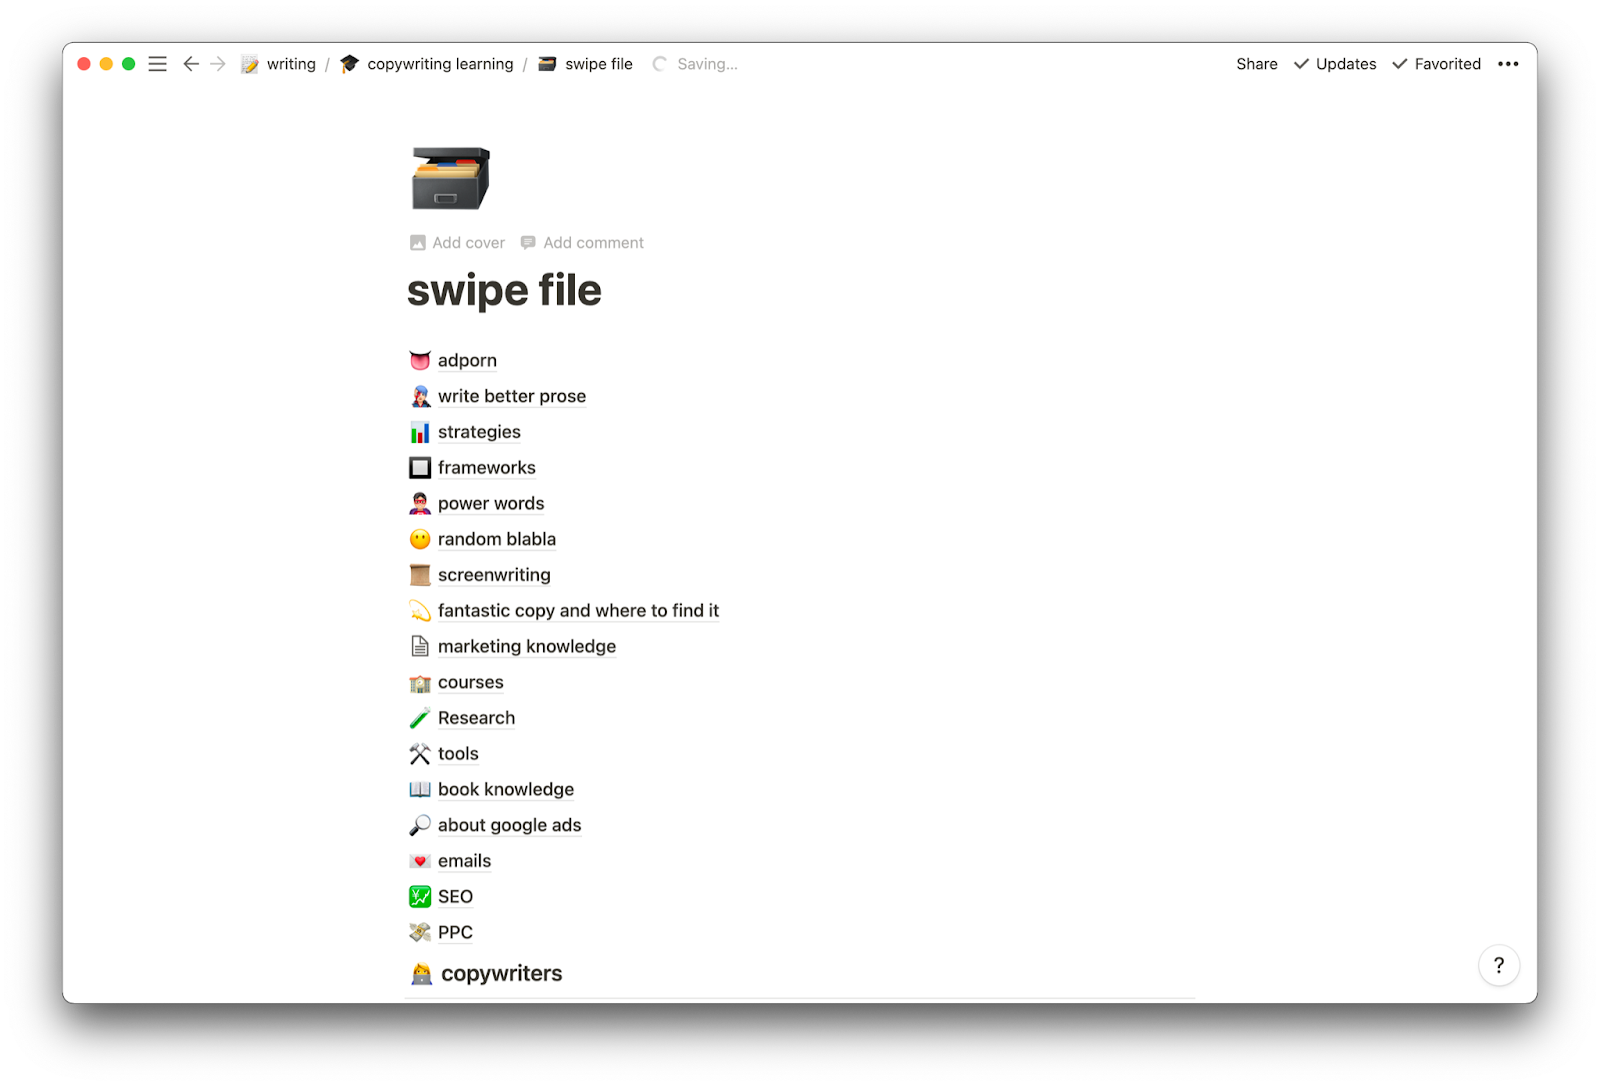 Screenshot of the swipe file categories in my notion.so.